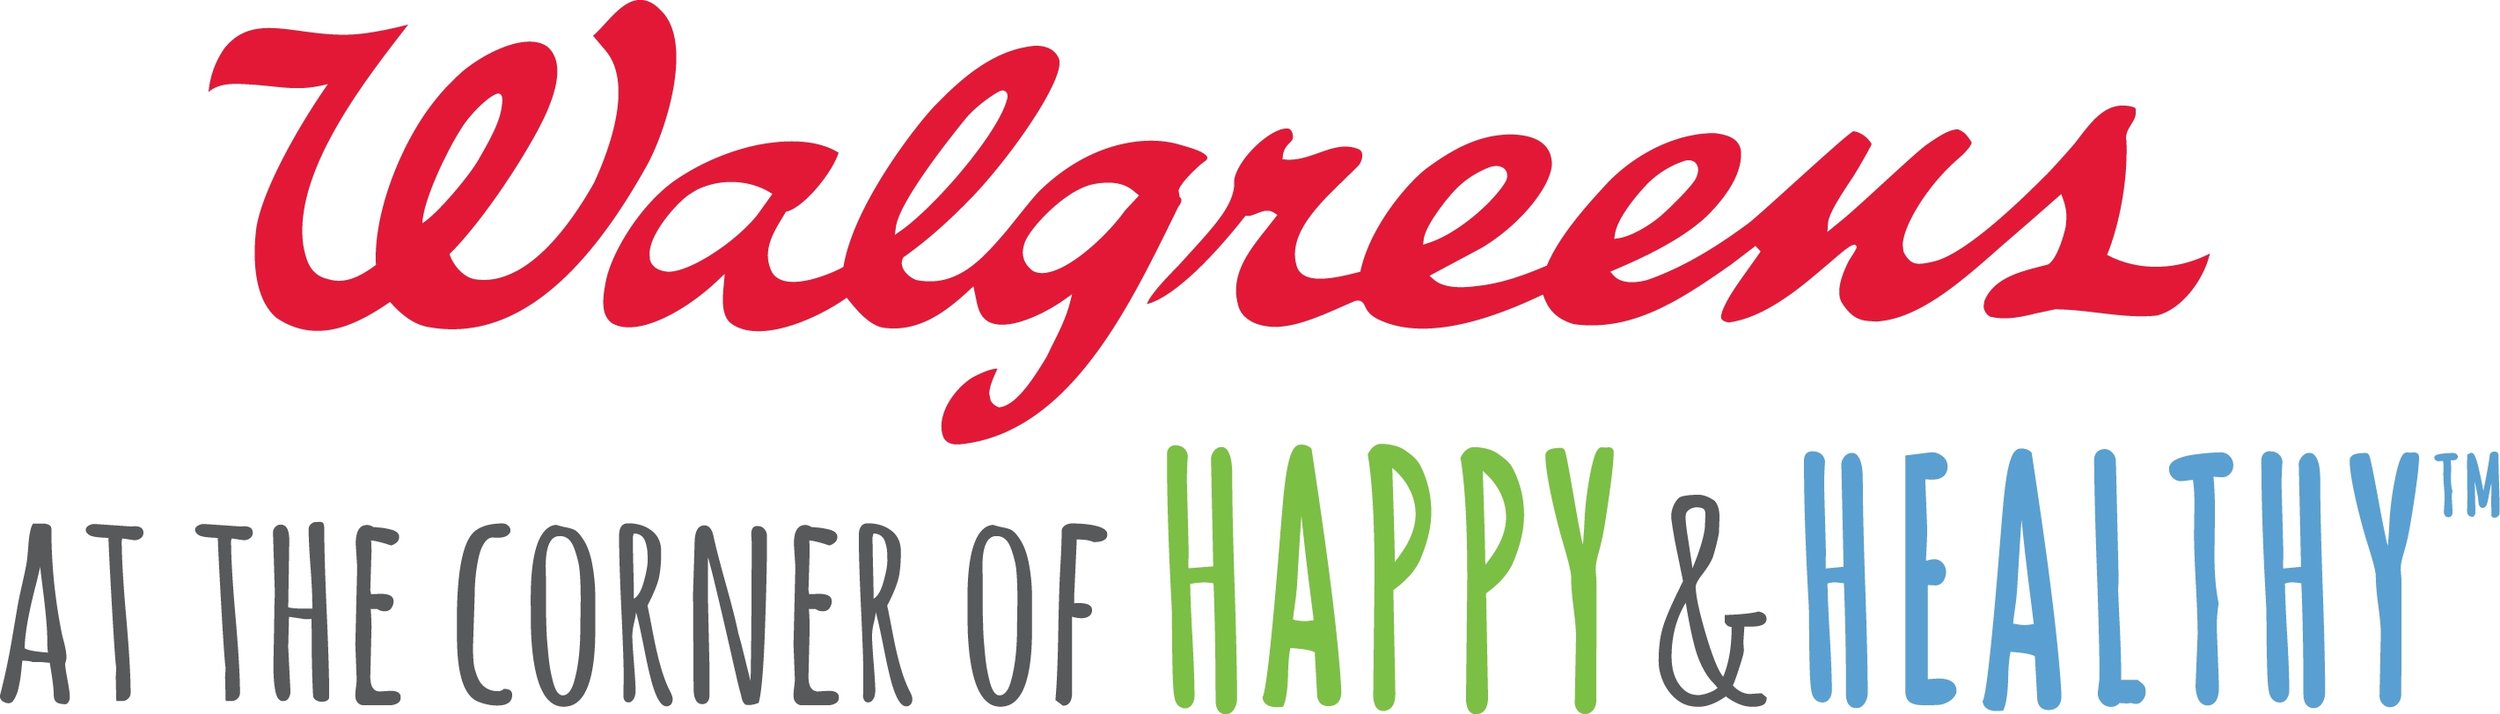 Walgreens_happy_healthy logo.jpg